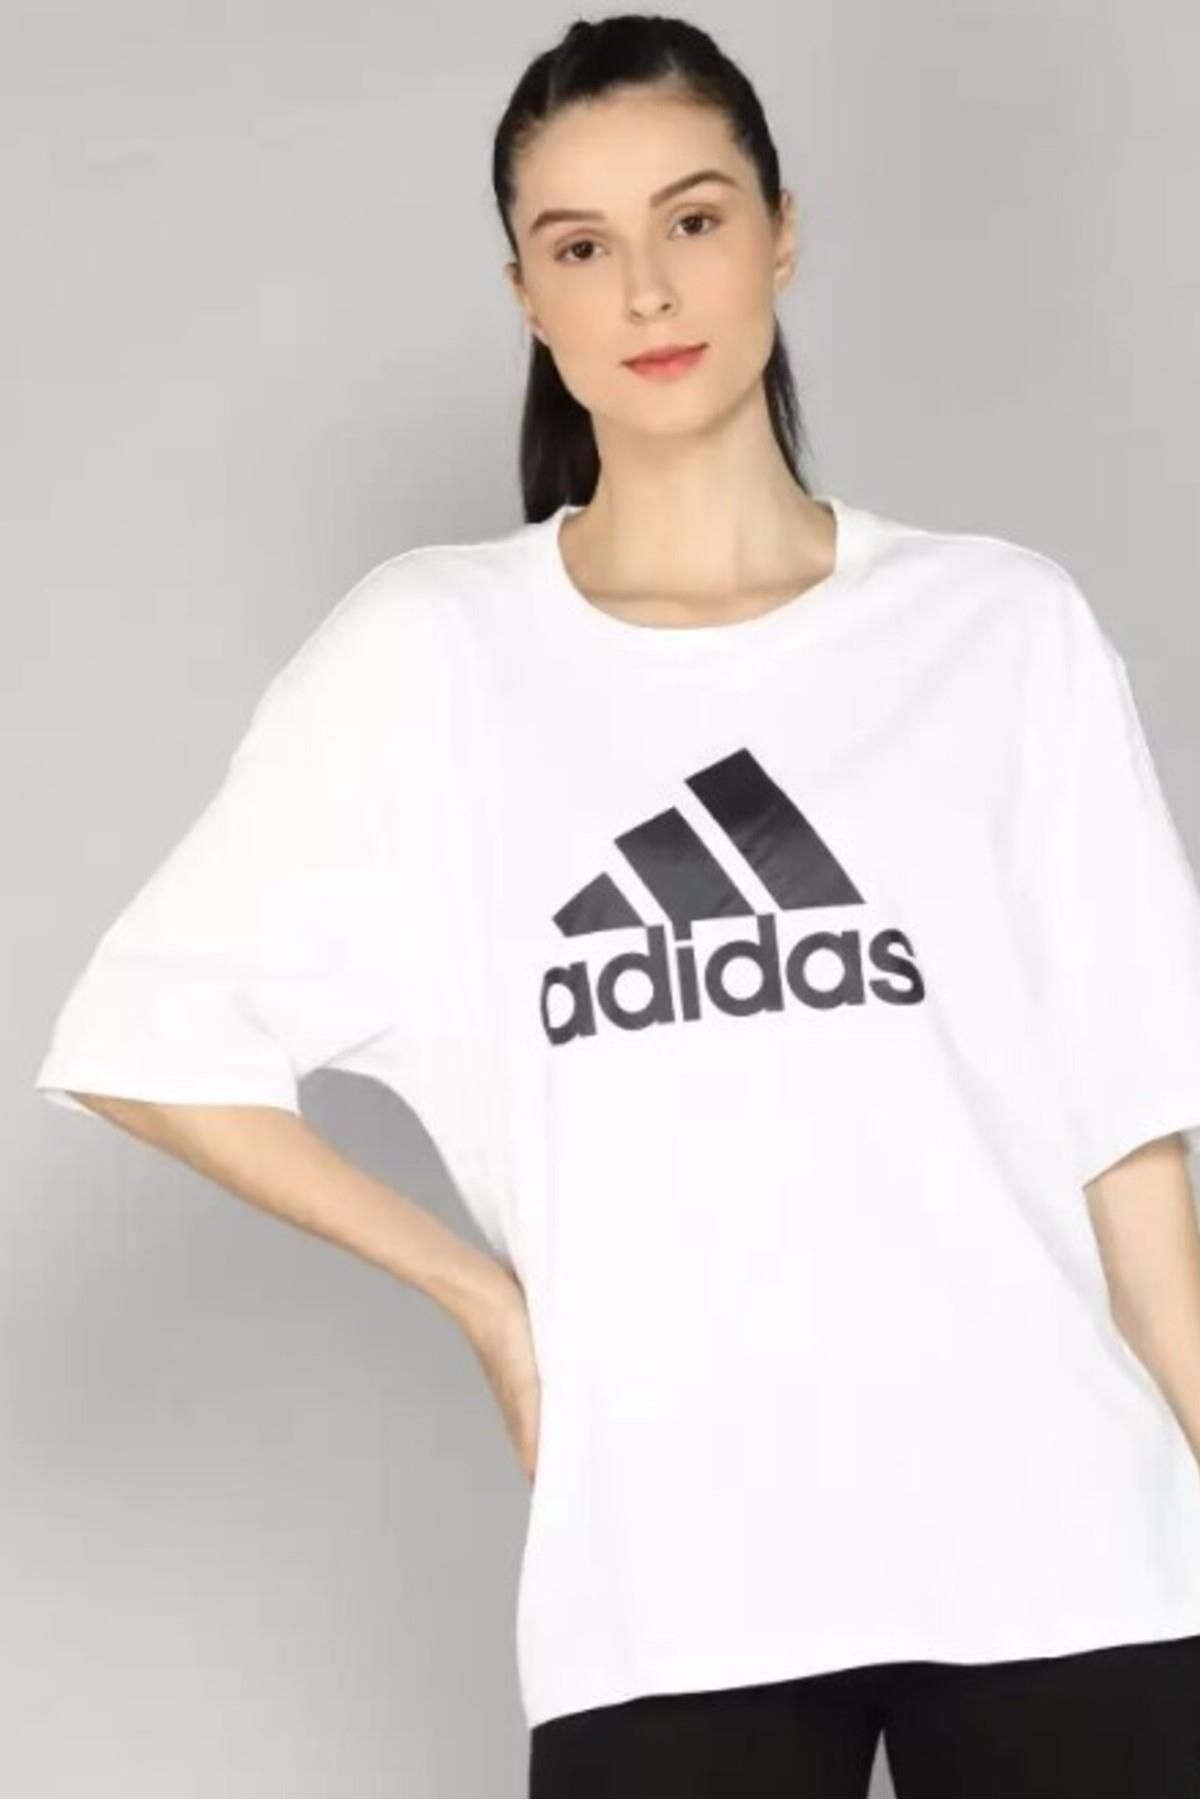 adidas adidas تی‌شرت زنانه با طراحی آینده‌نگرانه و نشان از ورزش (مدل راحتی) - رنگ سفید